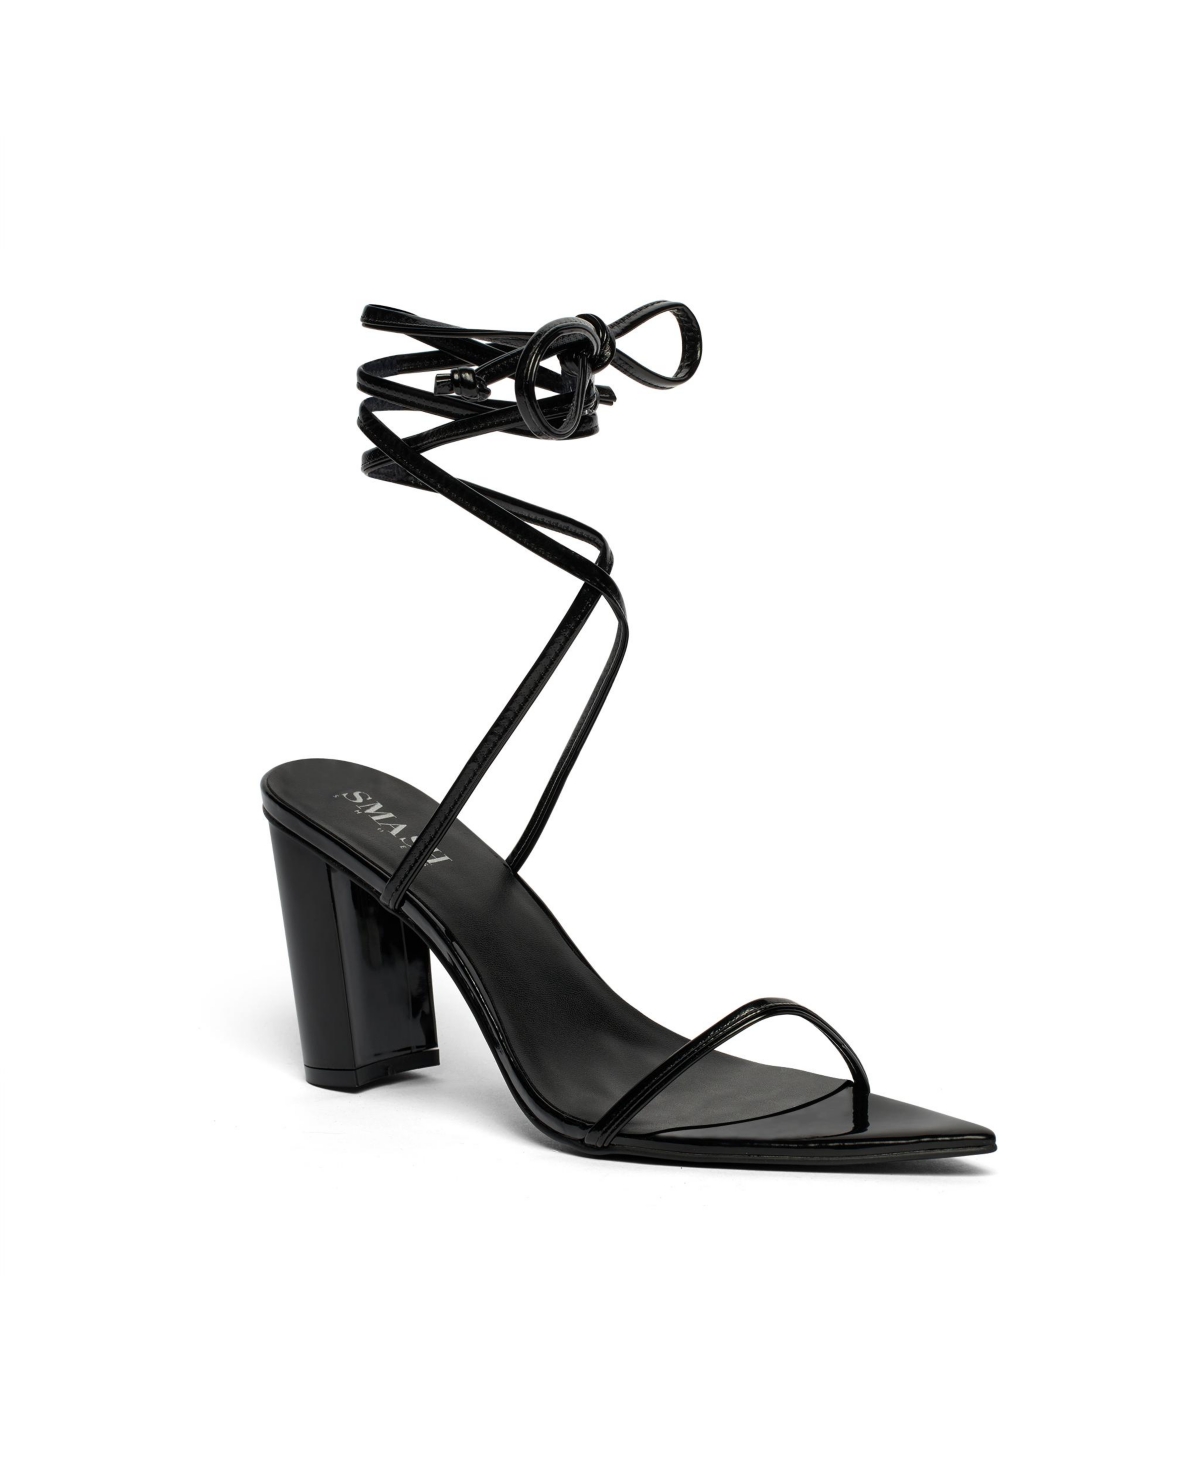 Women's Onyx Wraparound Ankle Strap Dress Sandals - Extended sizes 10-14 - Black